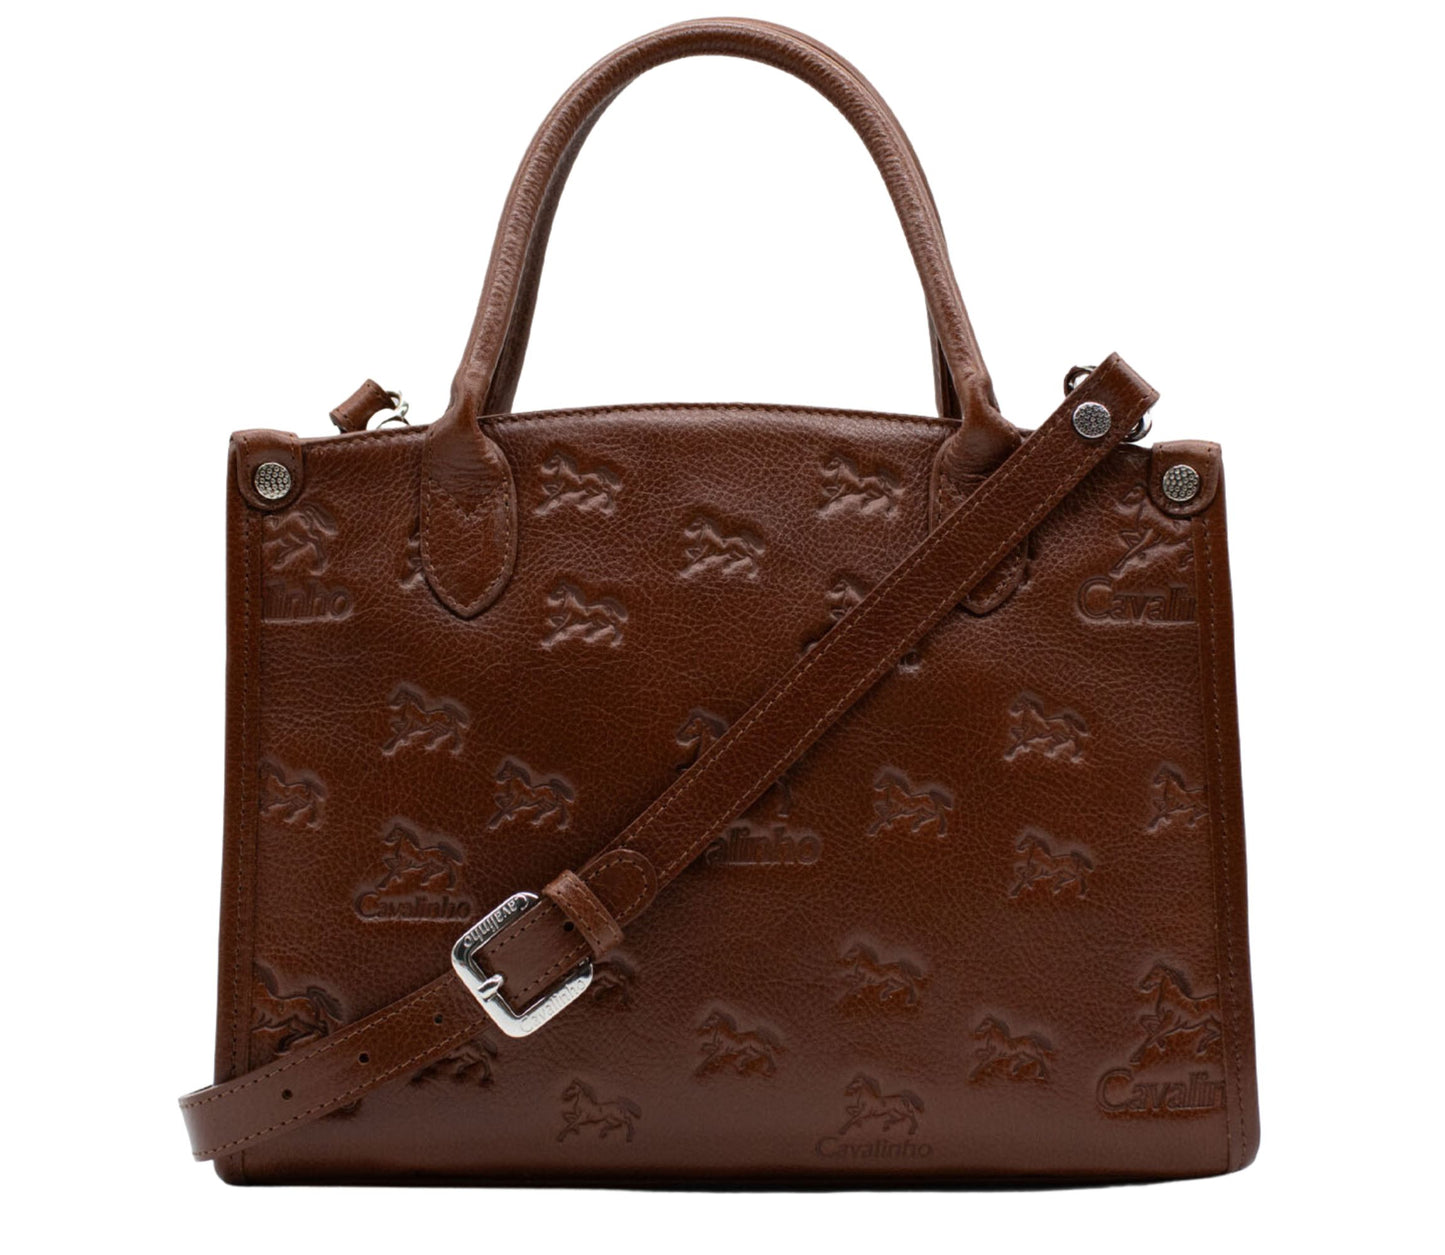 Cavalinho Cavalo Lusitano Leather Handbag - SaddleBrown - 18090480.13.99_3